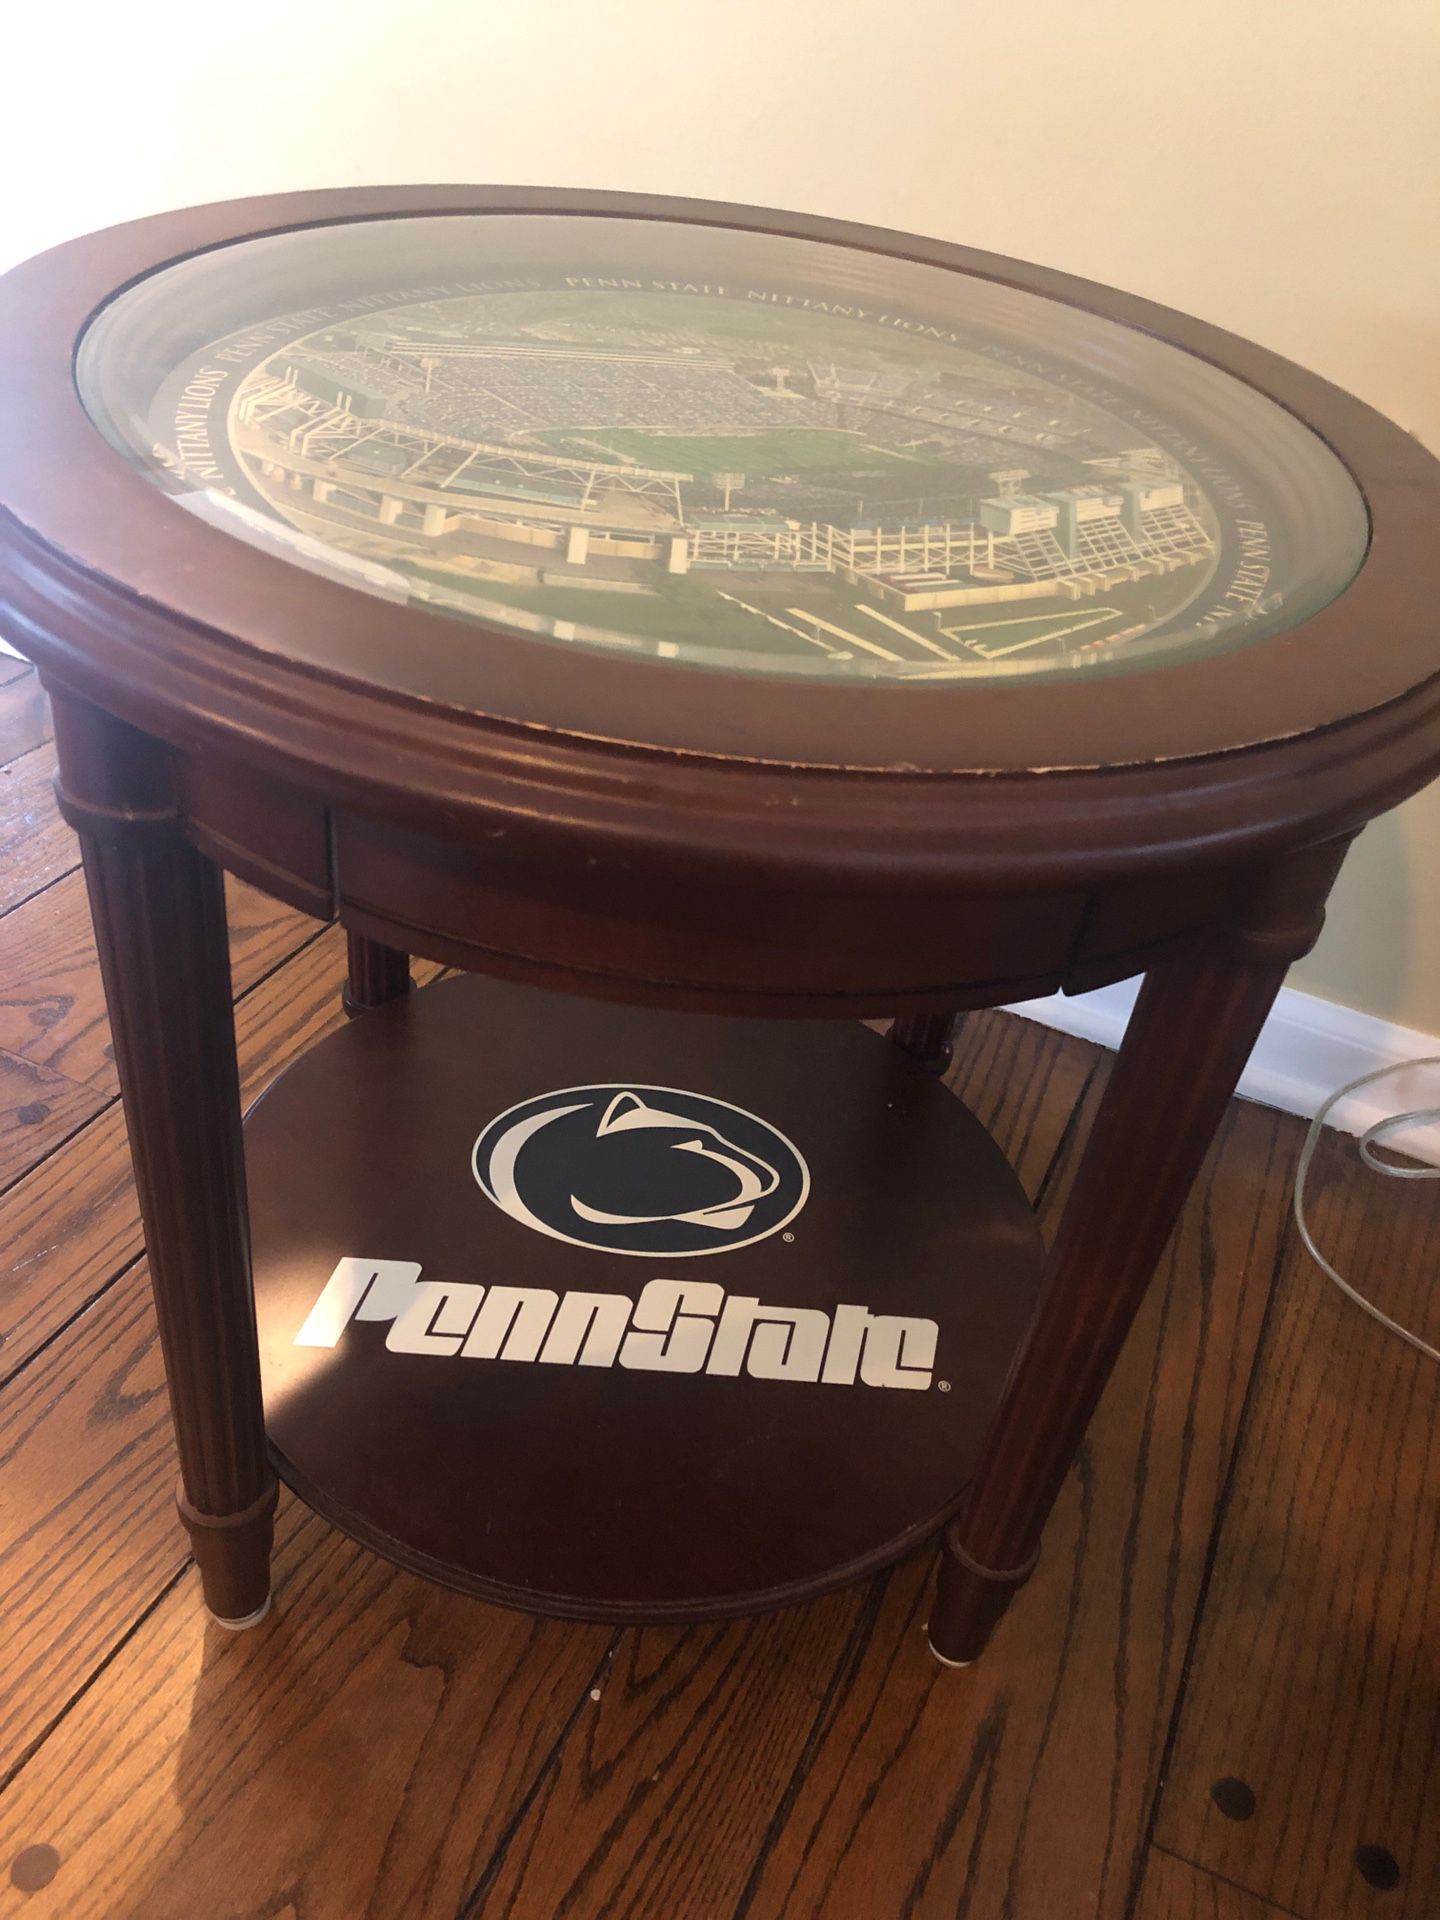 Penn State Beaver Stadium End Table By Danbury Mint $100 Obo